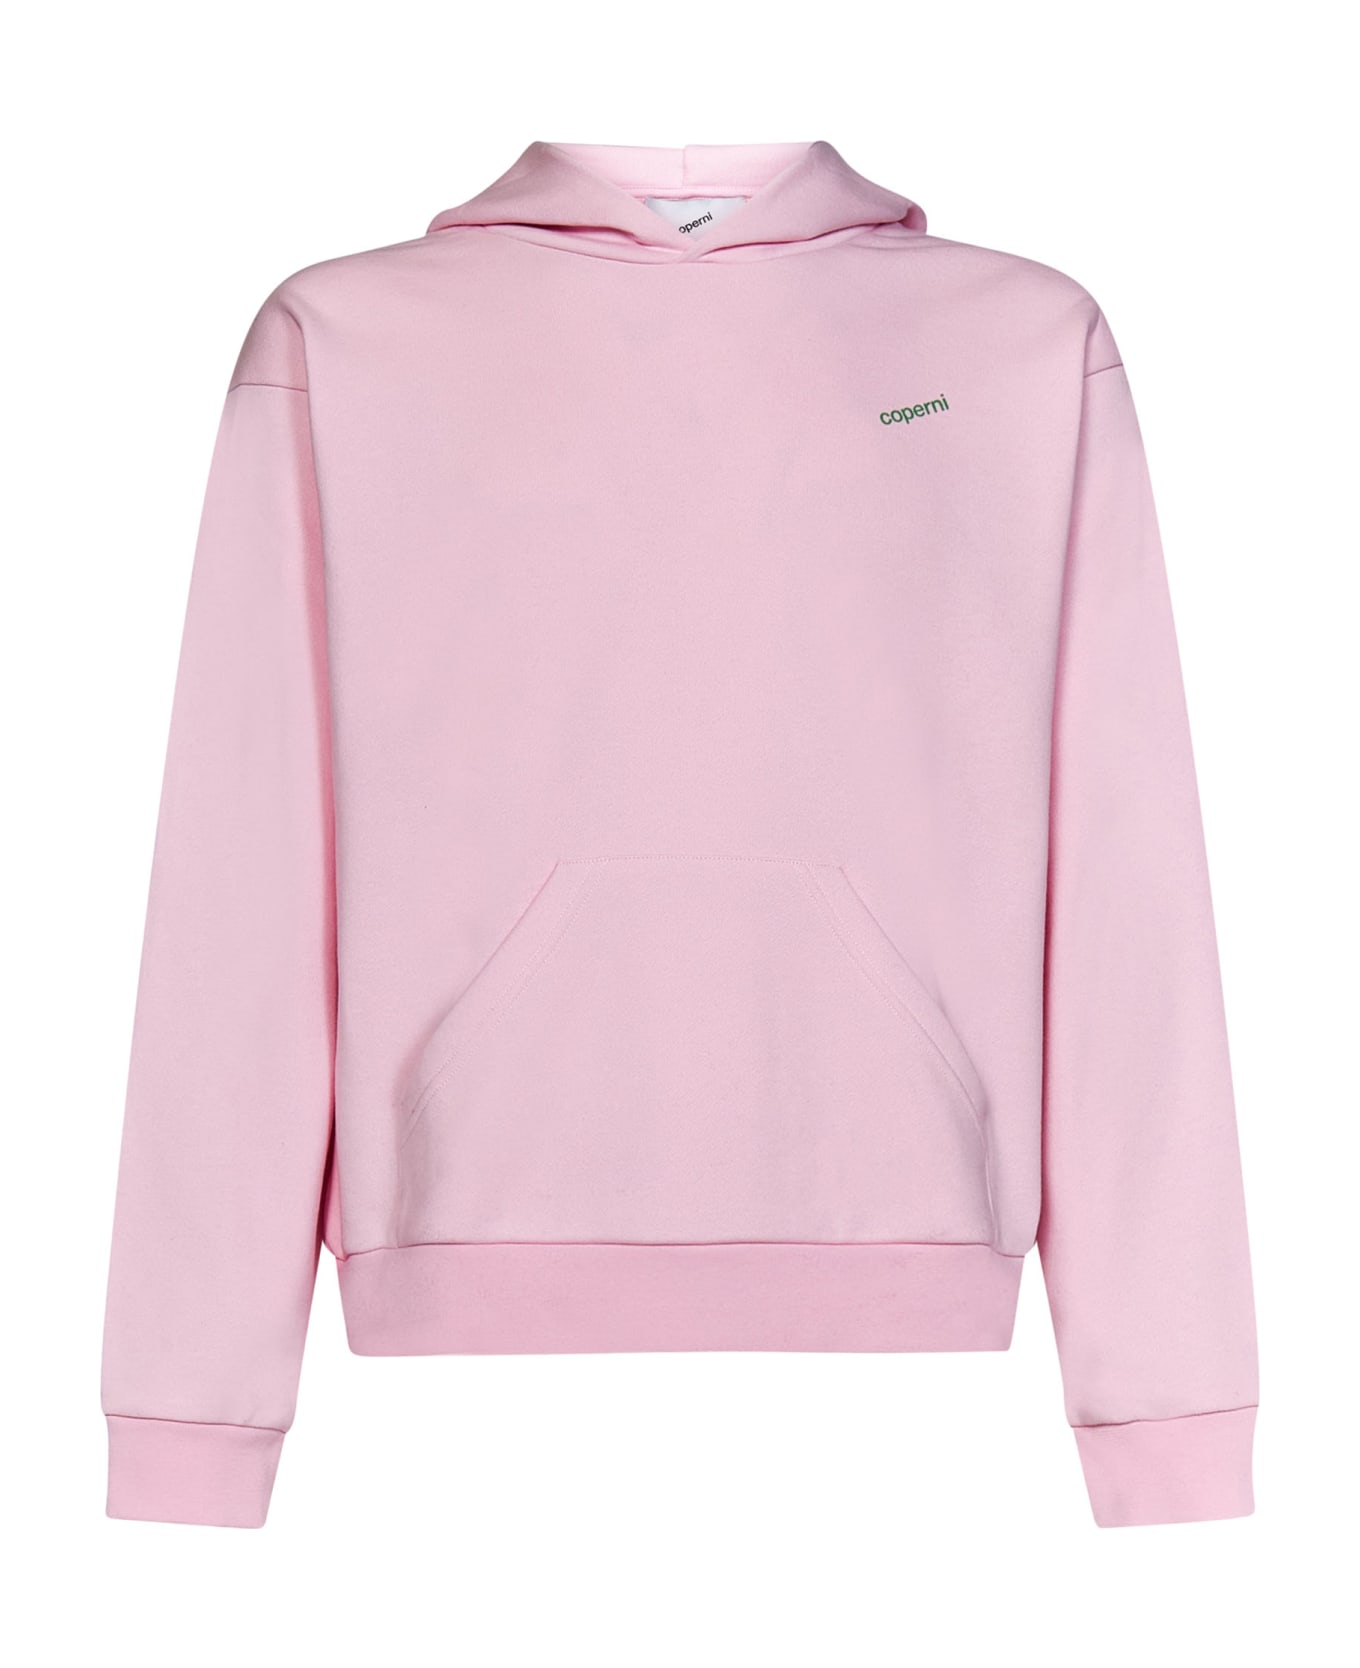 Coperni Logo Sweatshirt - Pink フリース